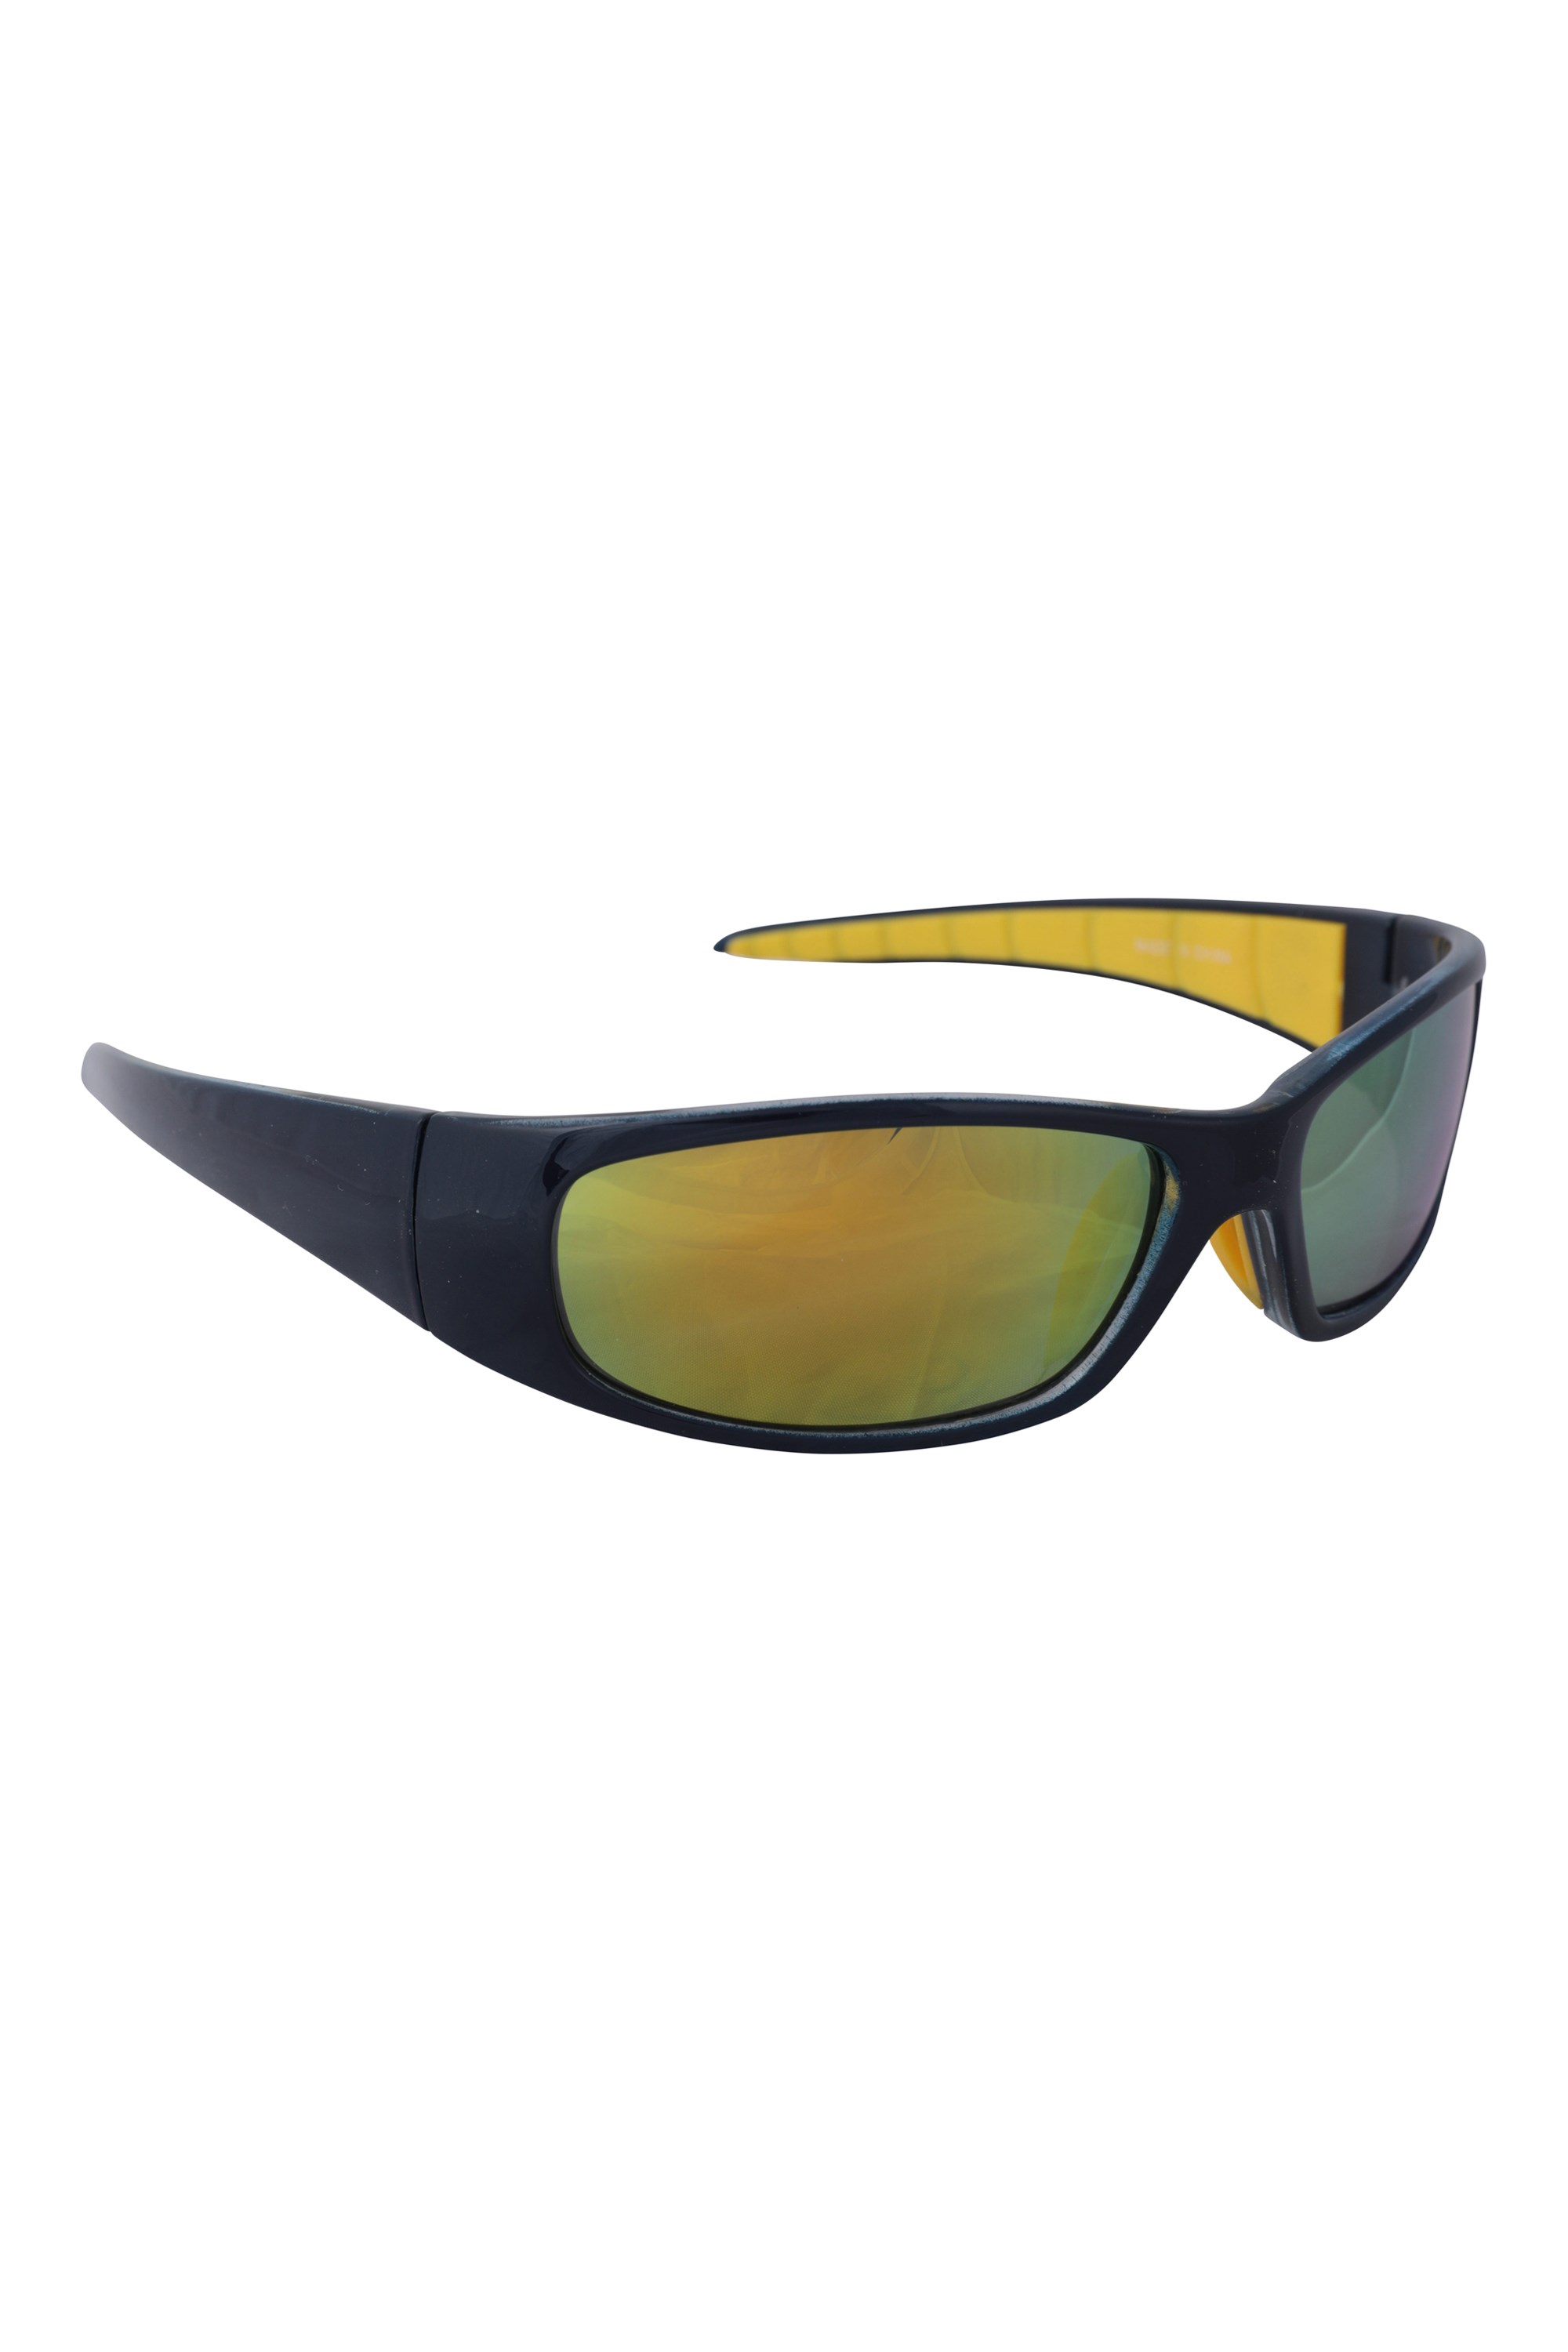 Flying Fisherman Offline Sunglasses | Fisherman's Warehouse